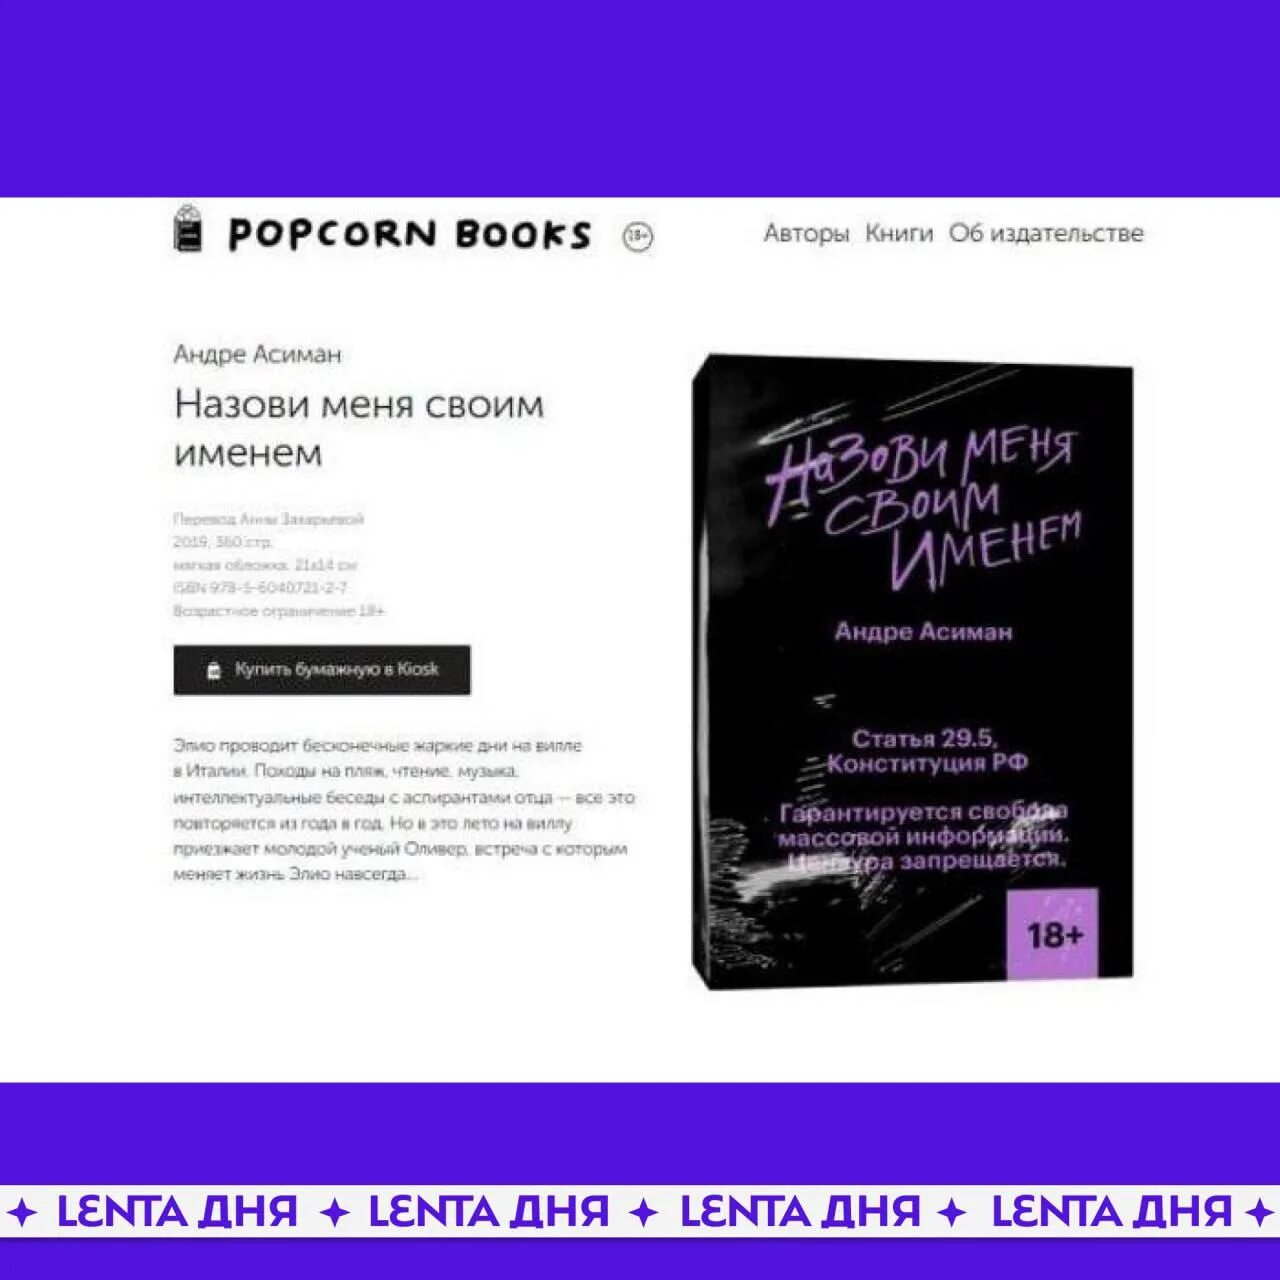 Popcorn books книги. Книги издательства попкорн букс. Издательство попкорн букс